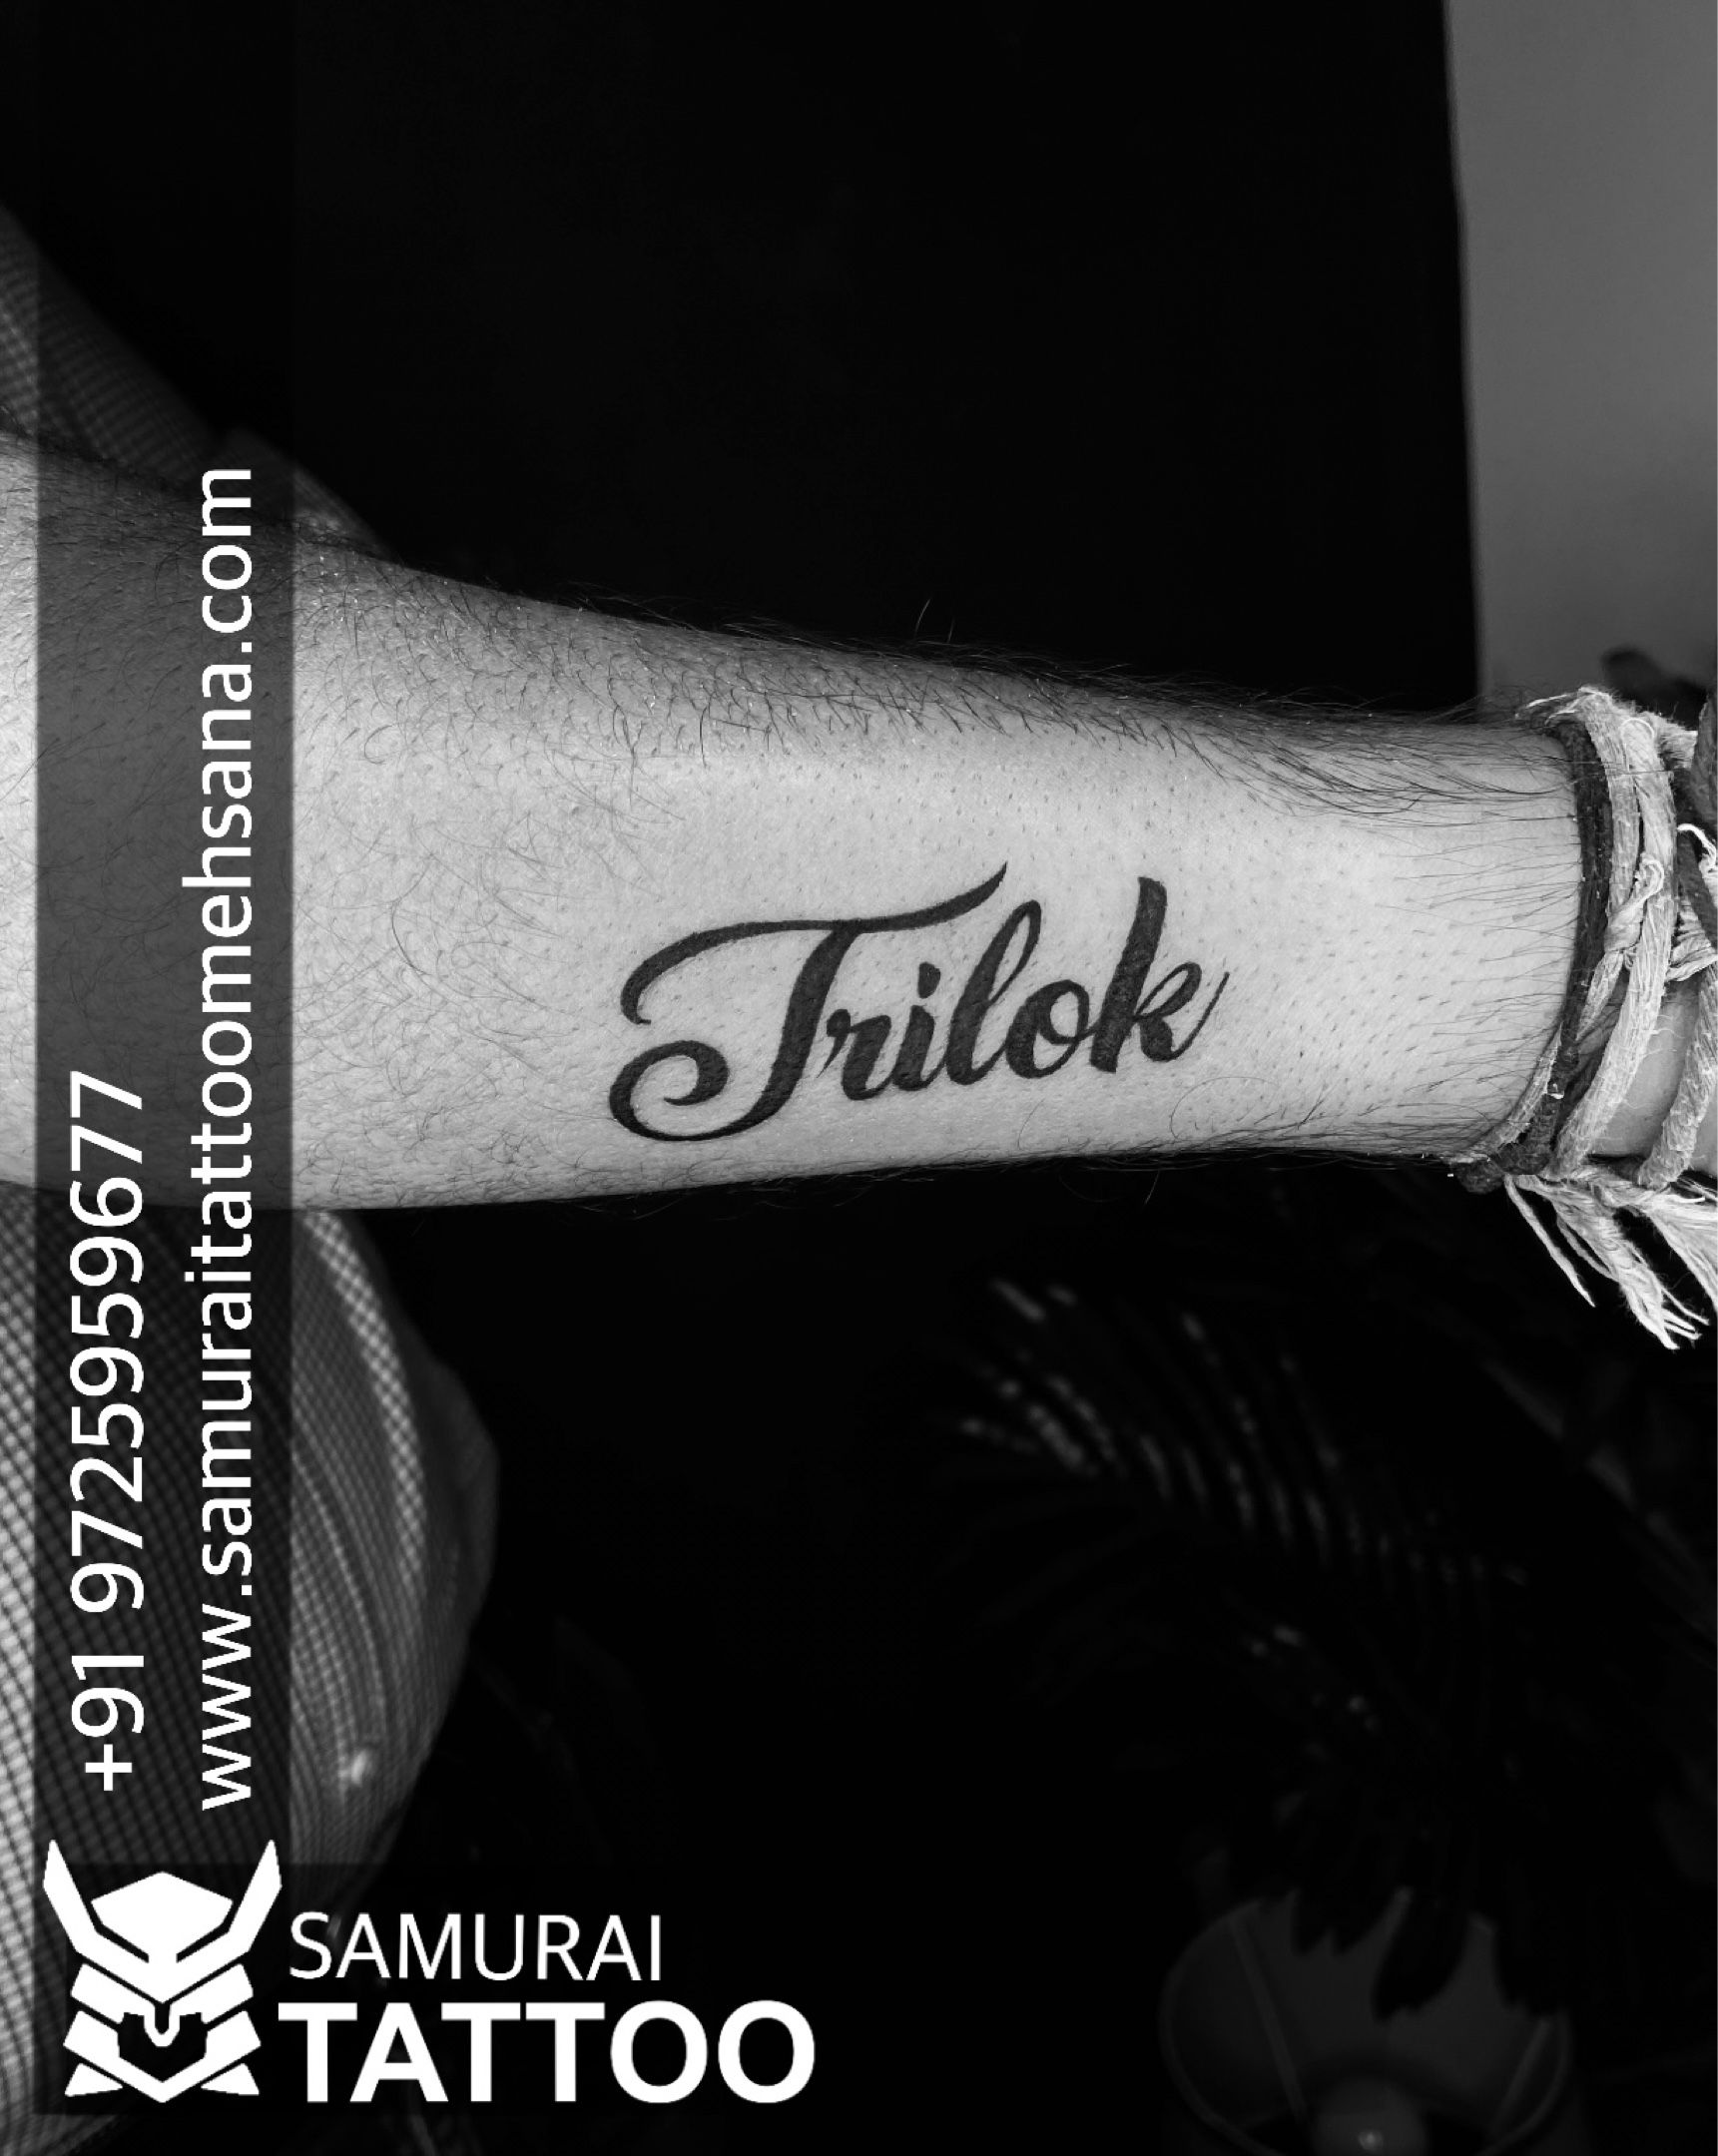 Tattoo uploaded by Samurai Tattoo mehsana • Trilok name tattoo |Trilok  tattoo |Trilok name tattoo ideas |Trilok name tattoo design • Tattoodo